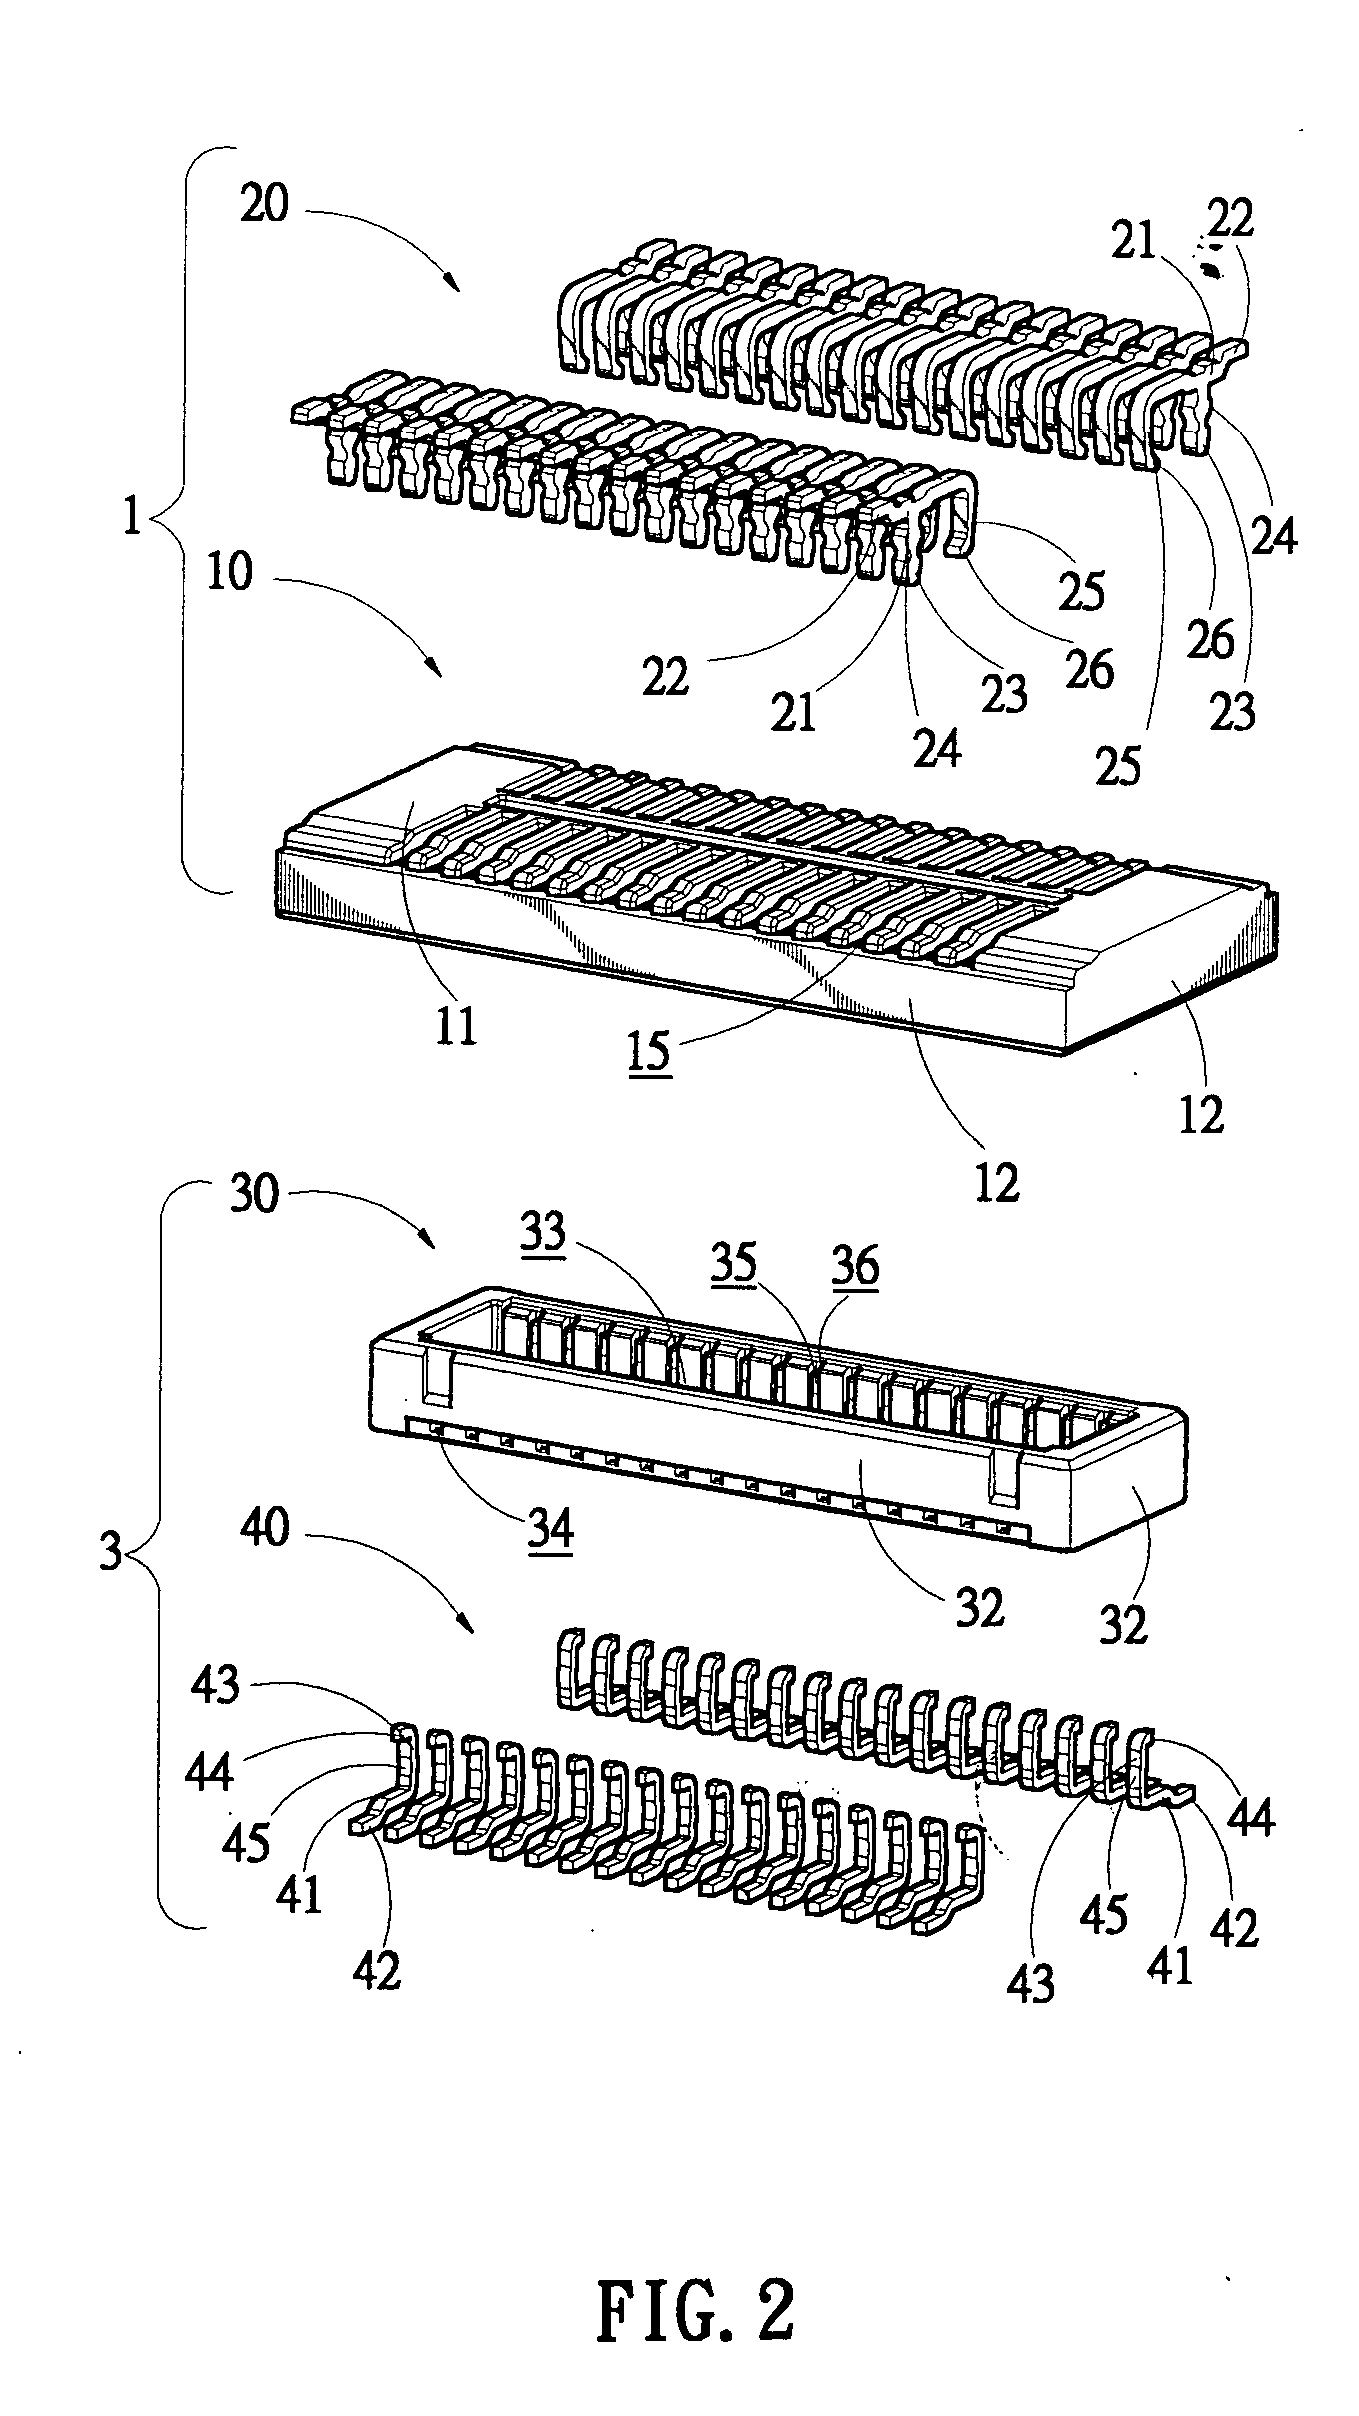 Board-to-board connector